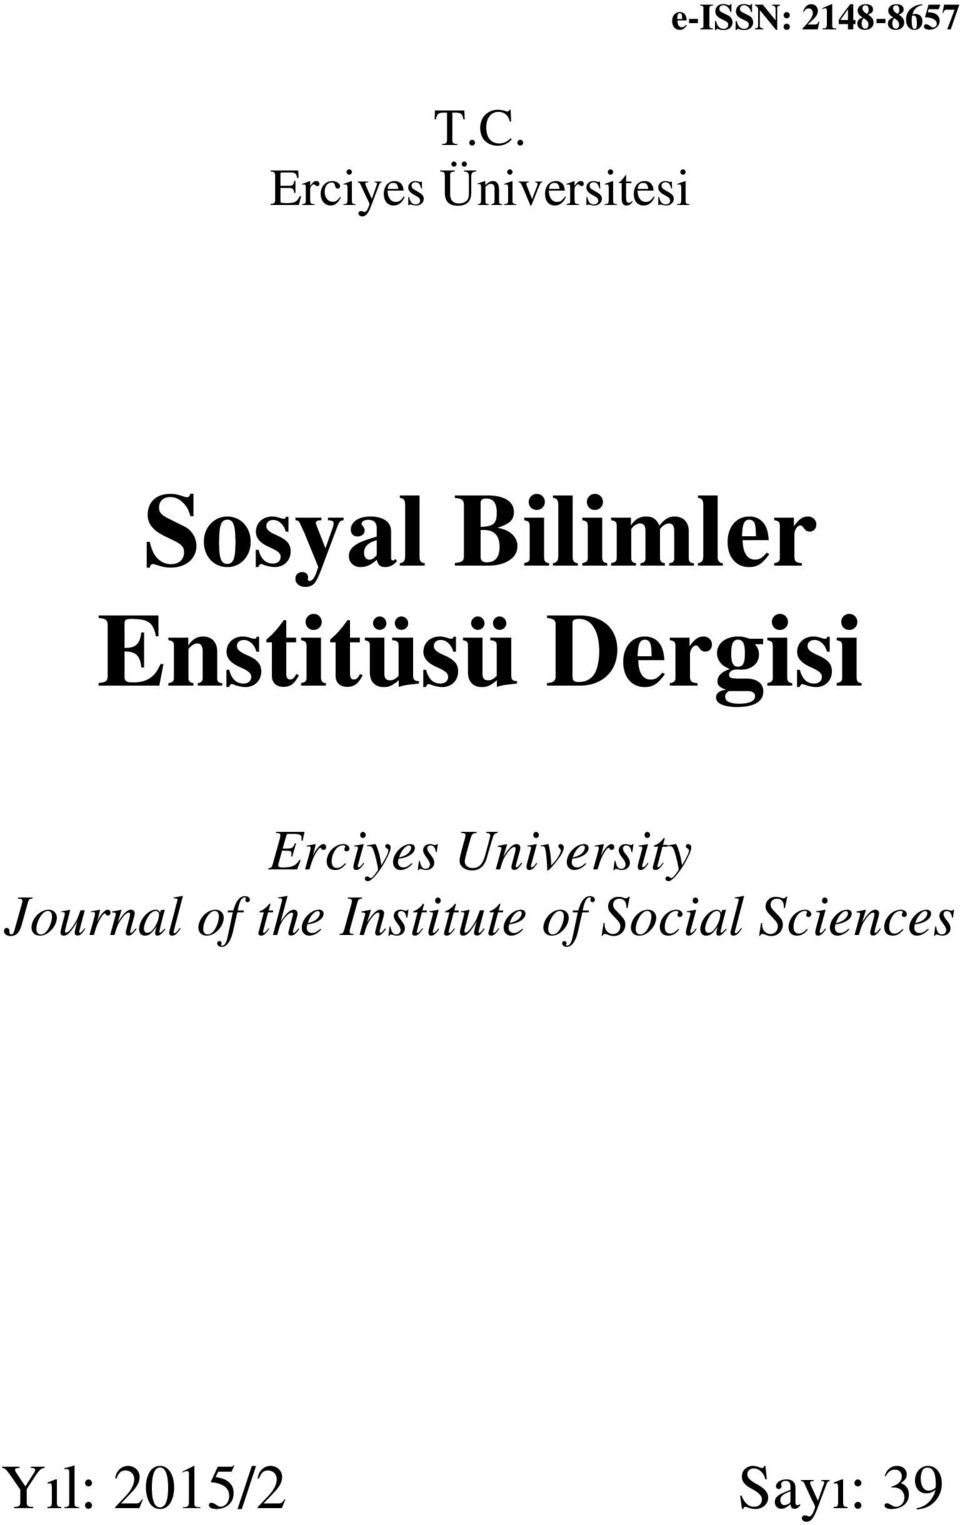 Enstitüsü Dergisi Erciyes University